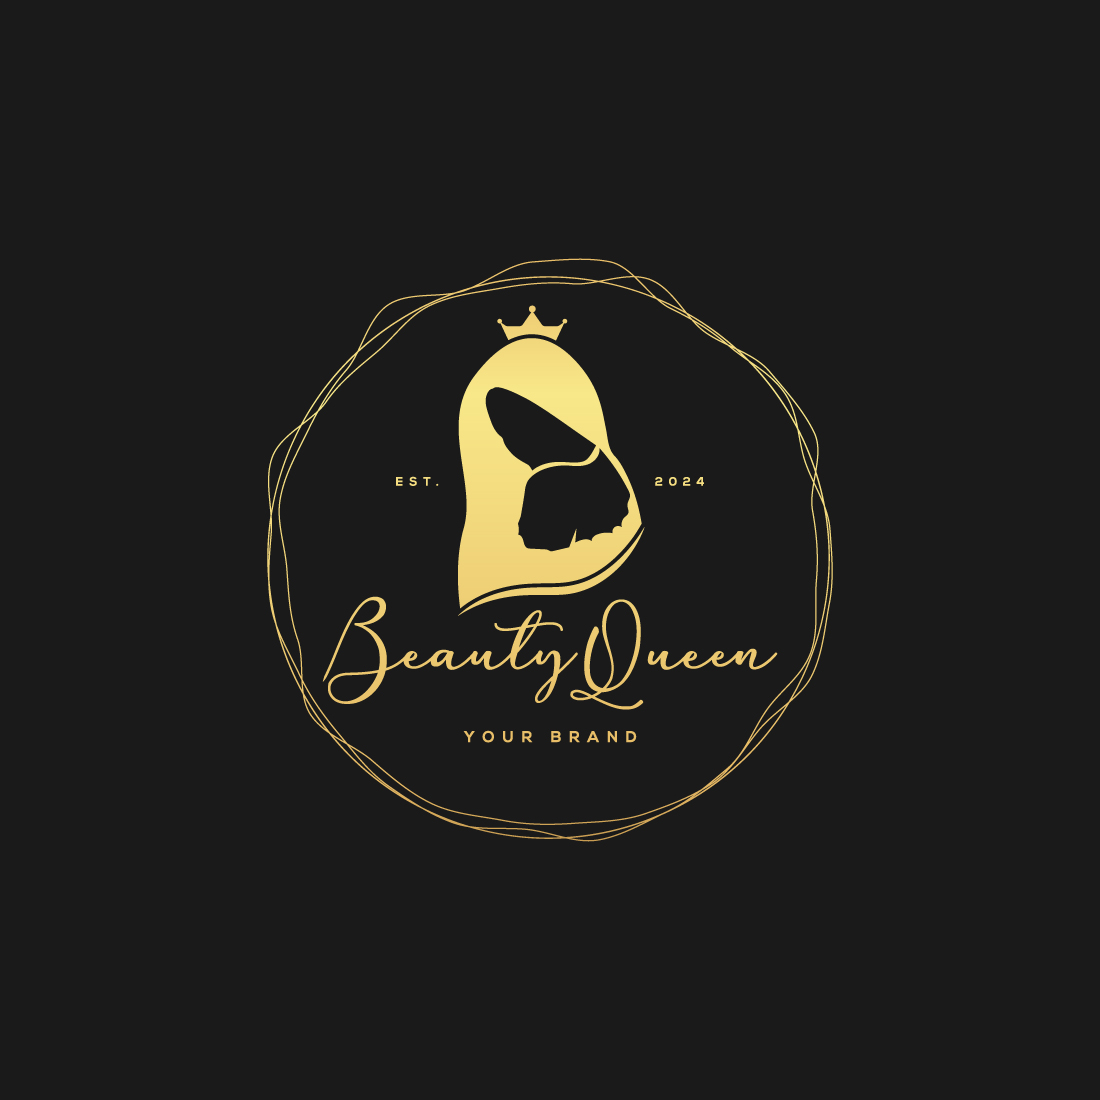 Beauty Queen logo design cover image.